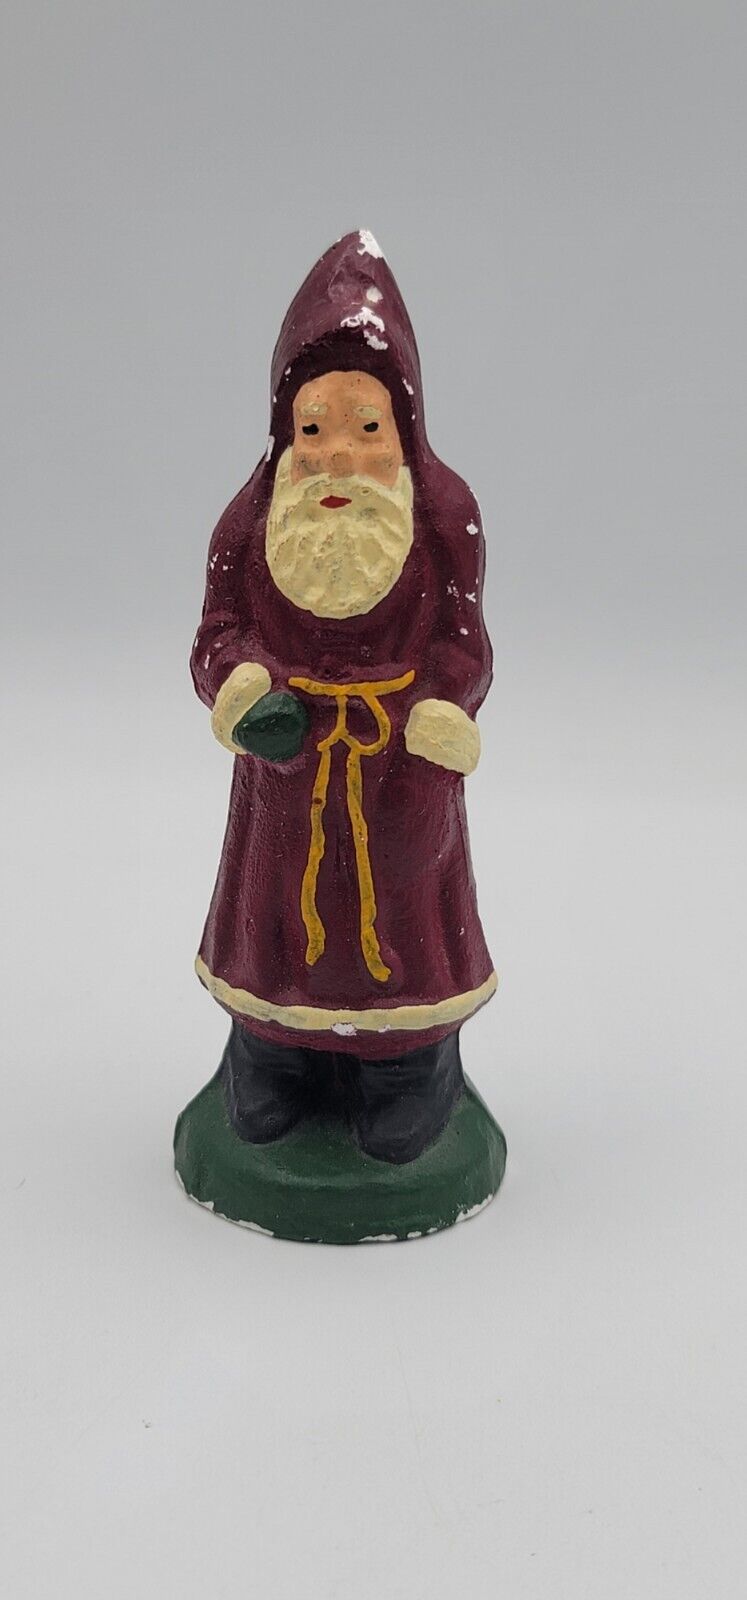 Antique German Santa Claus Chalkware Belsnickel Germany Christmas Figurine